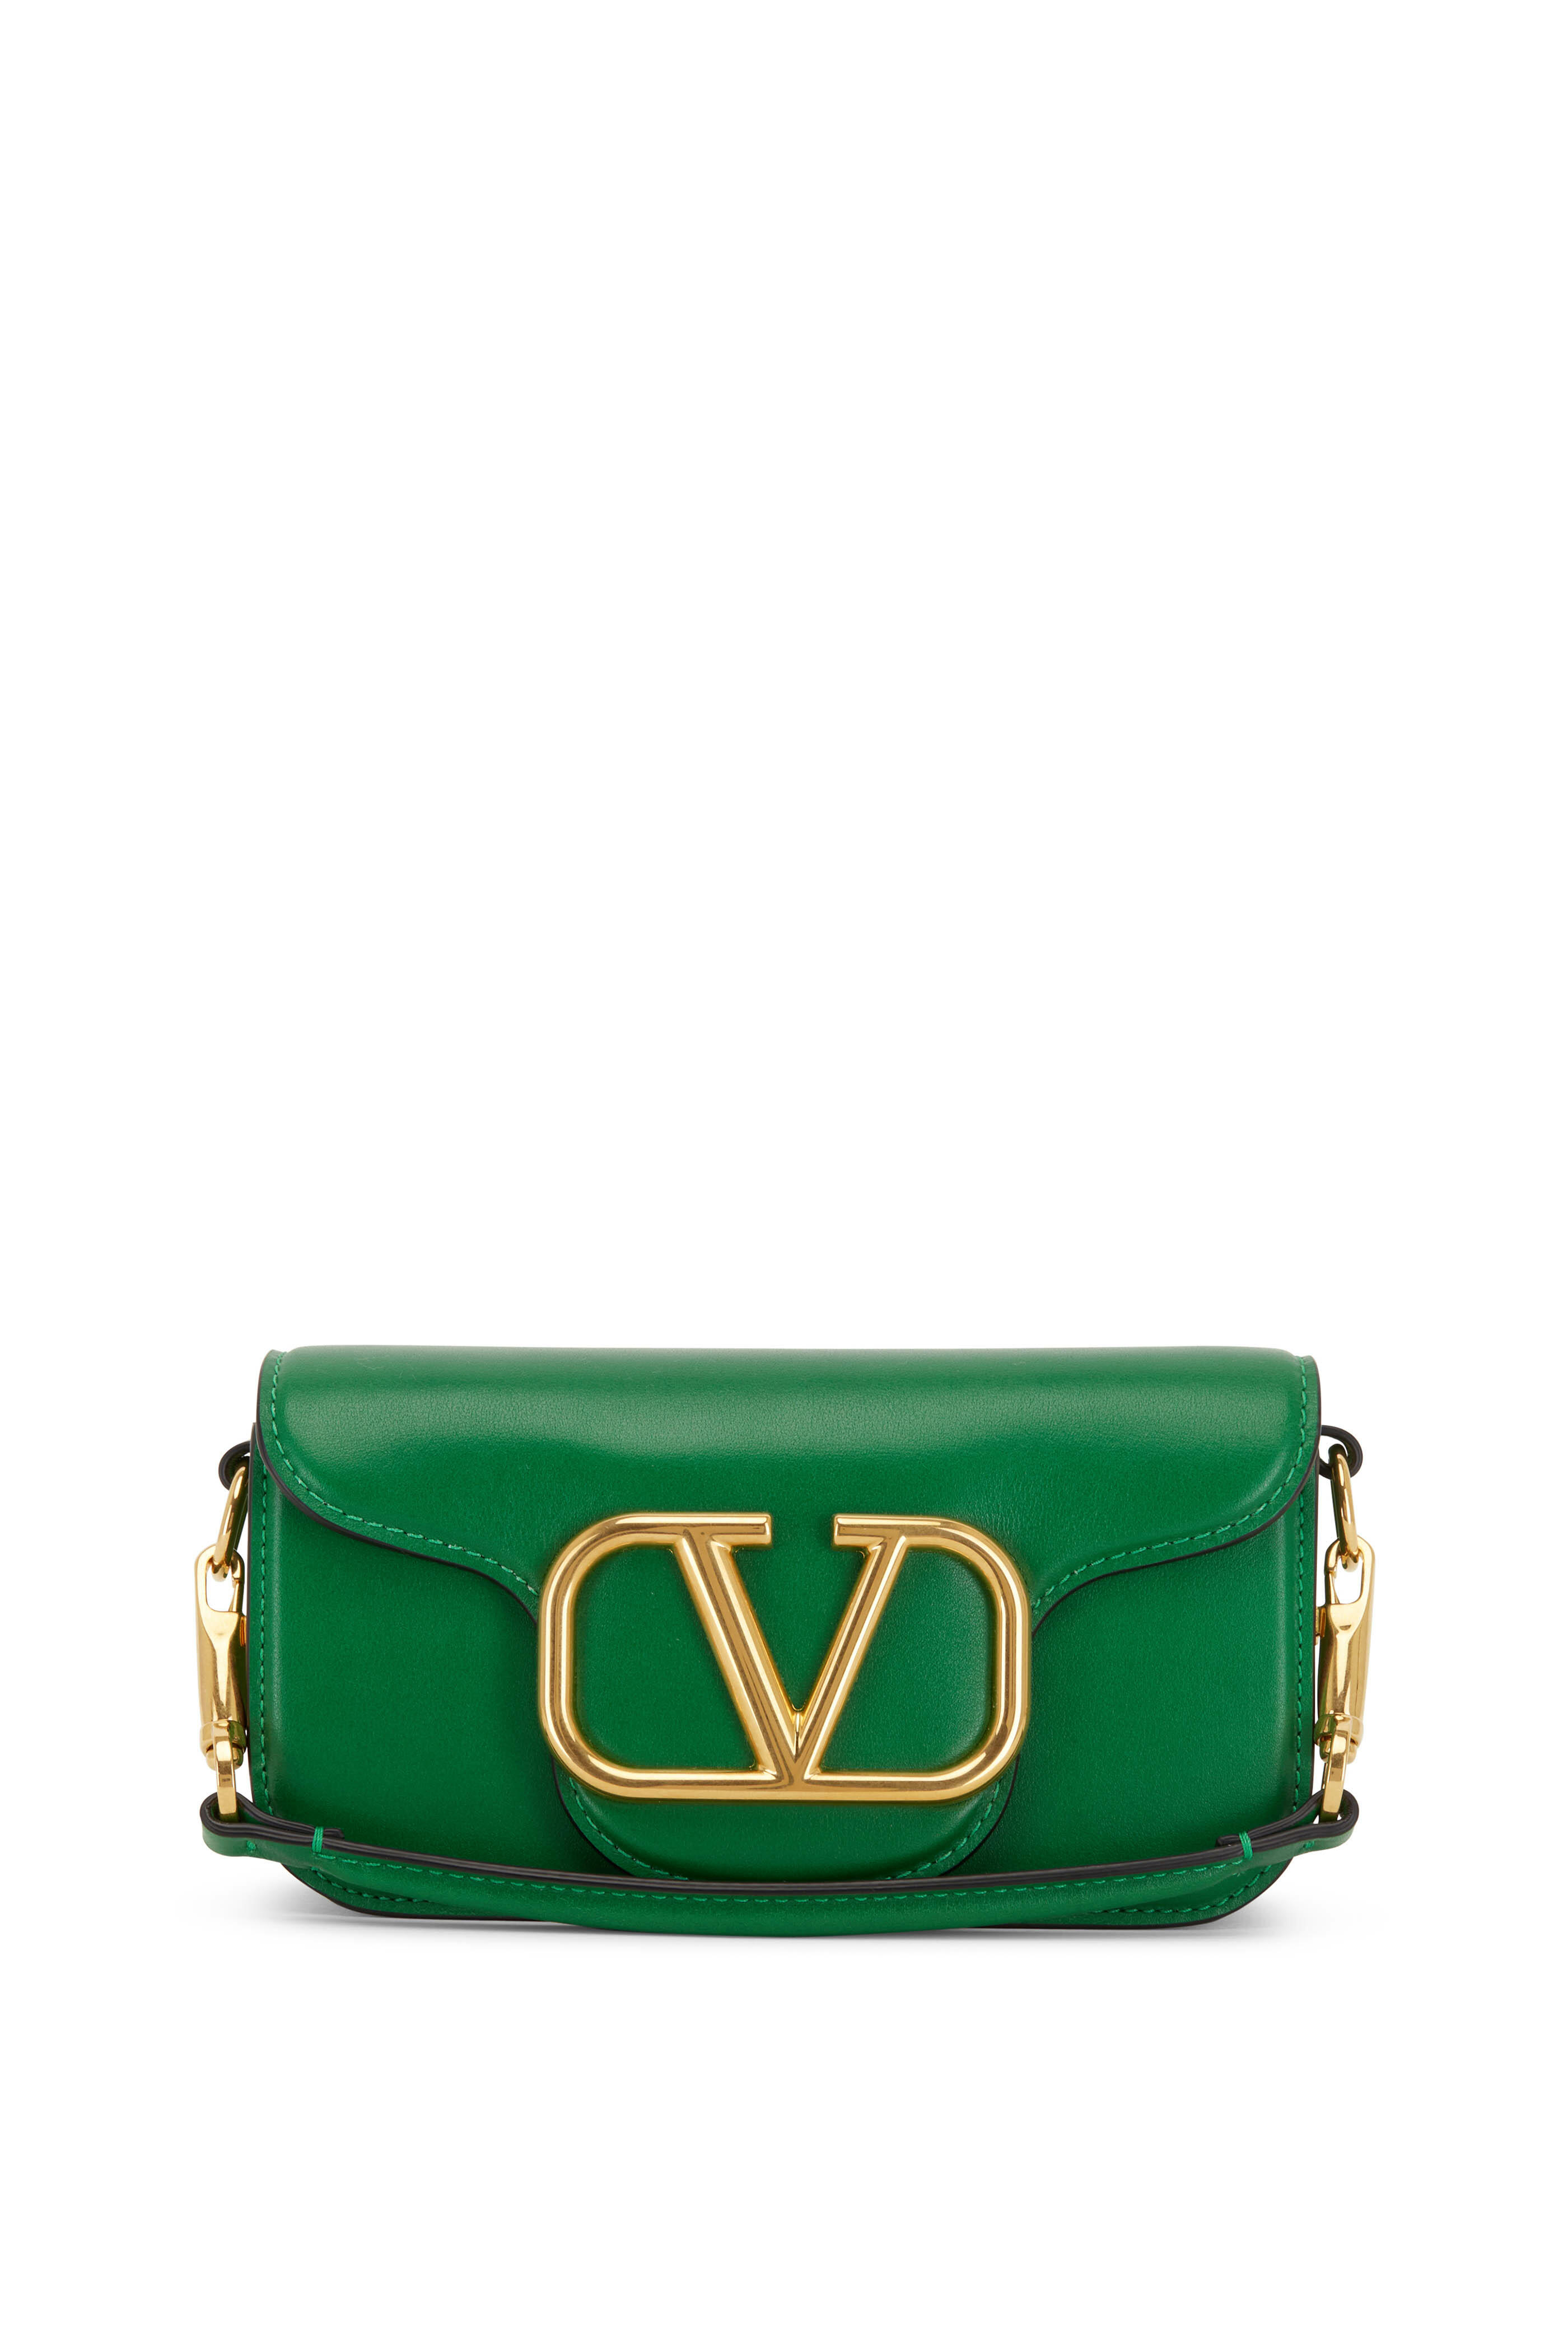 Valentino Women's Backpack Bags, Green, CENTÍMETROS